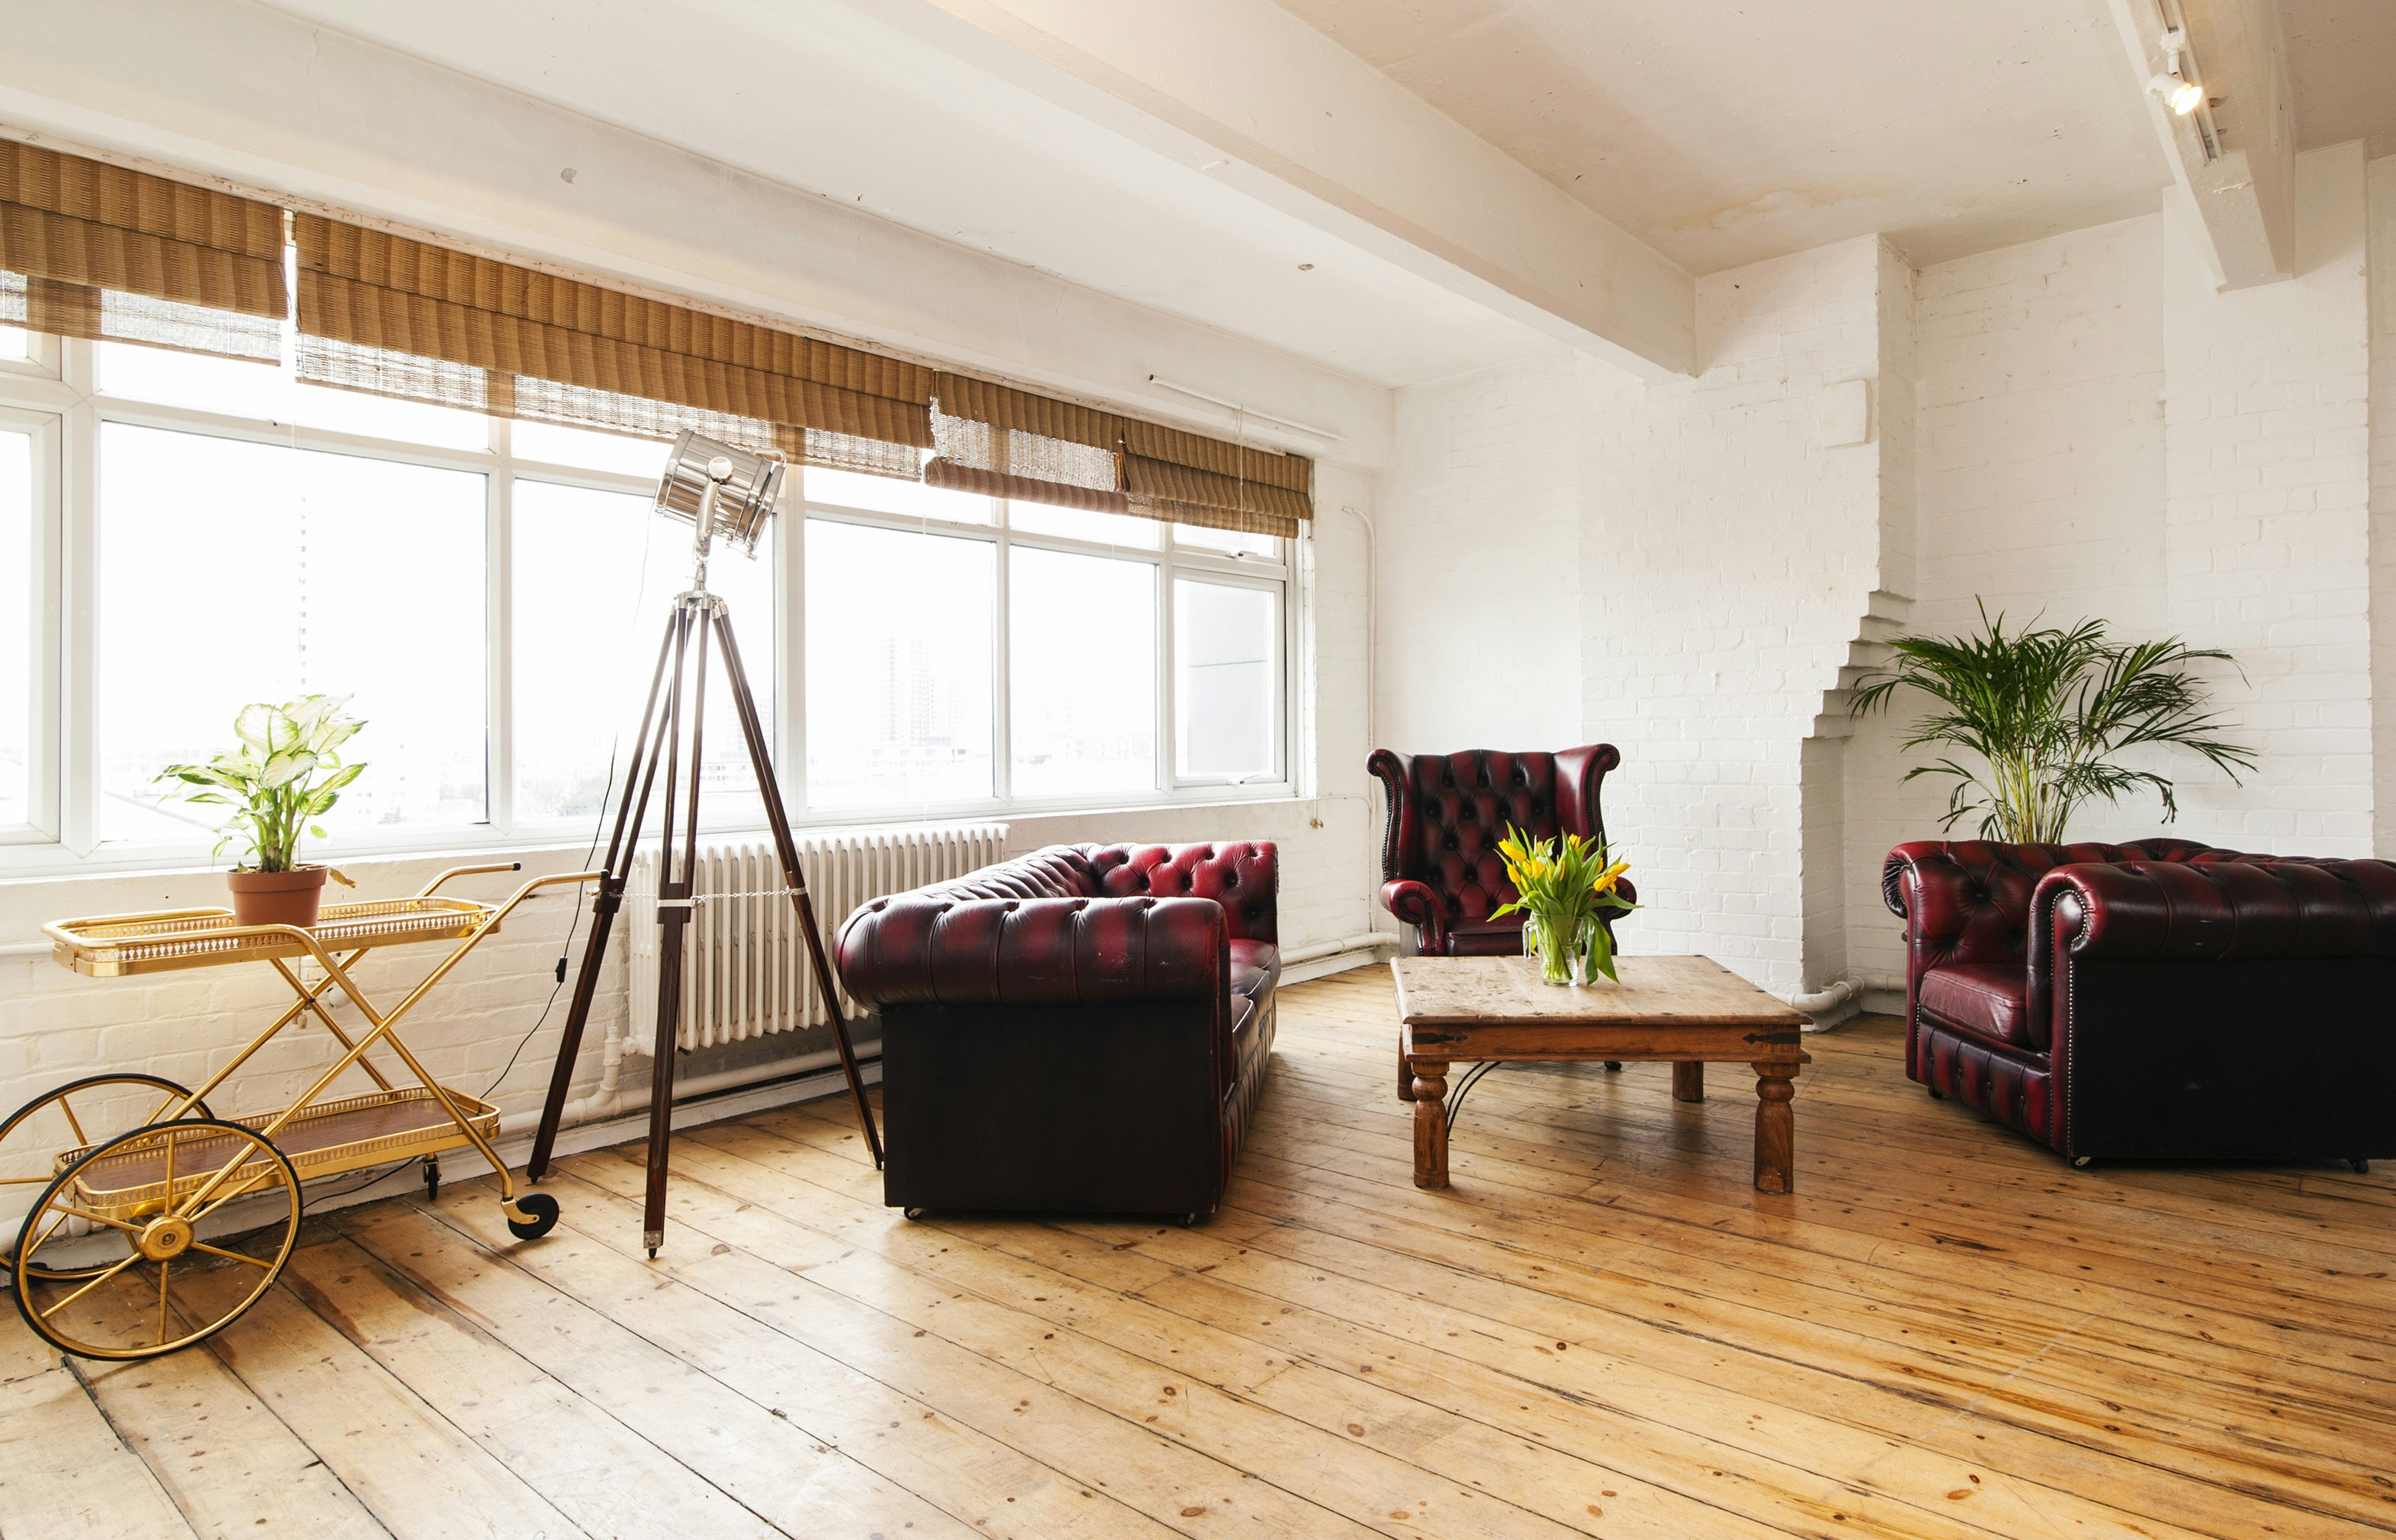 Photo Studios Venues in West London - 4th Floor Studios